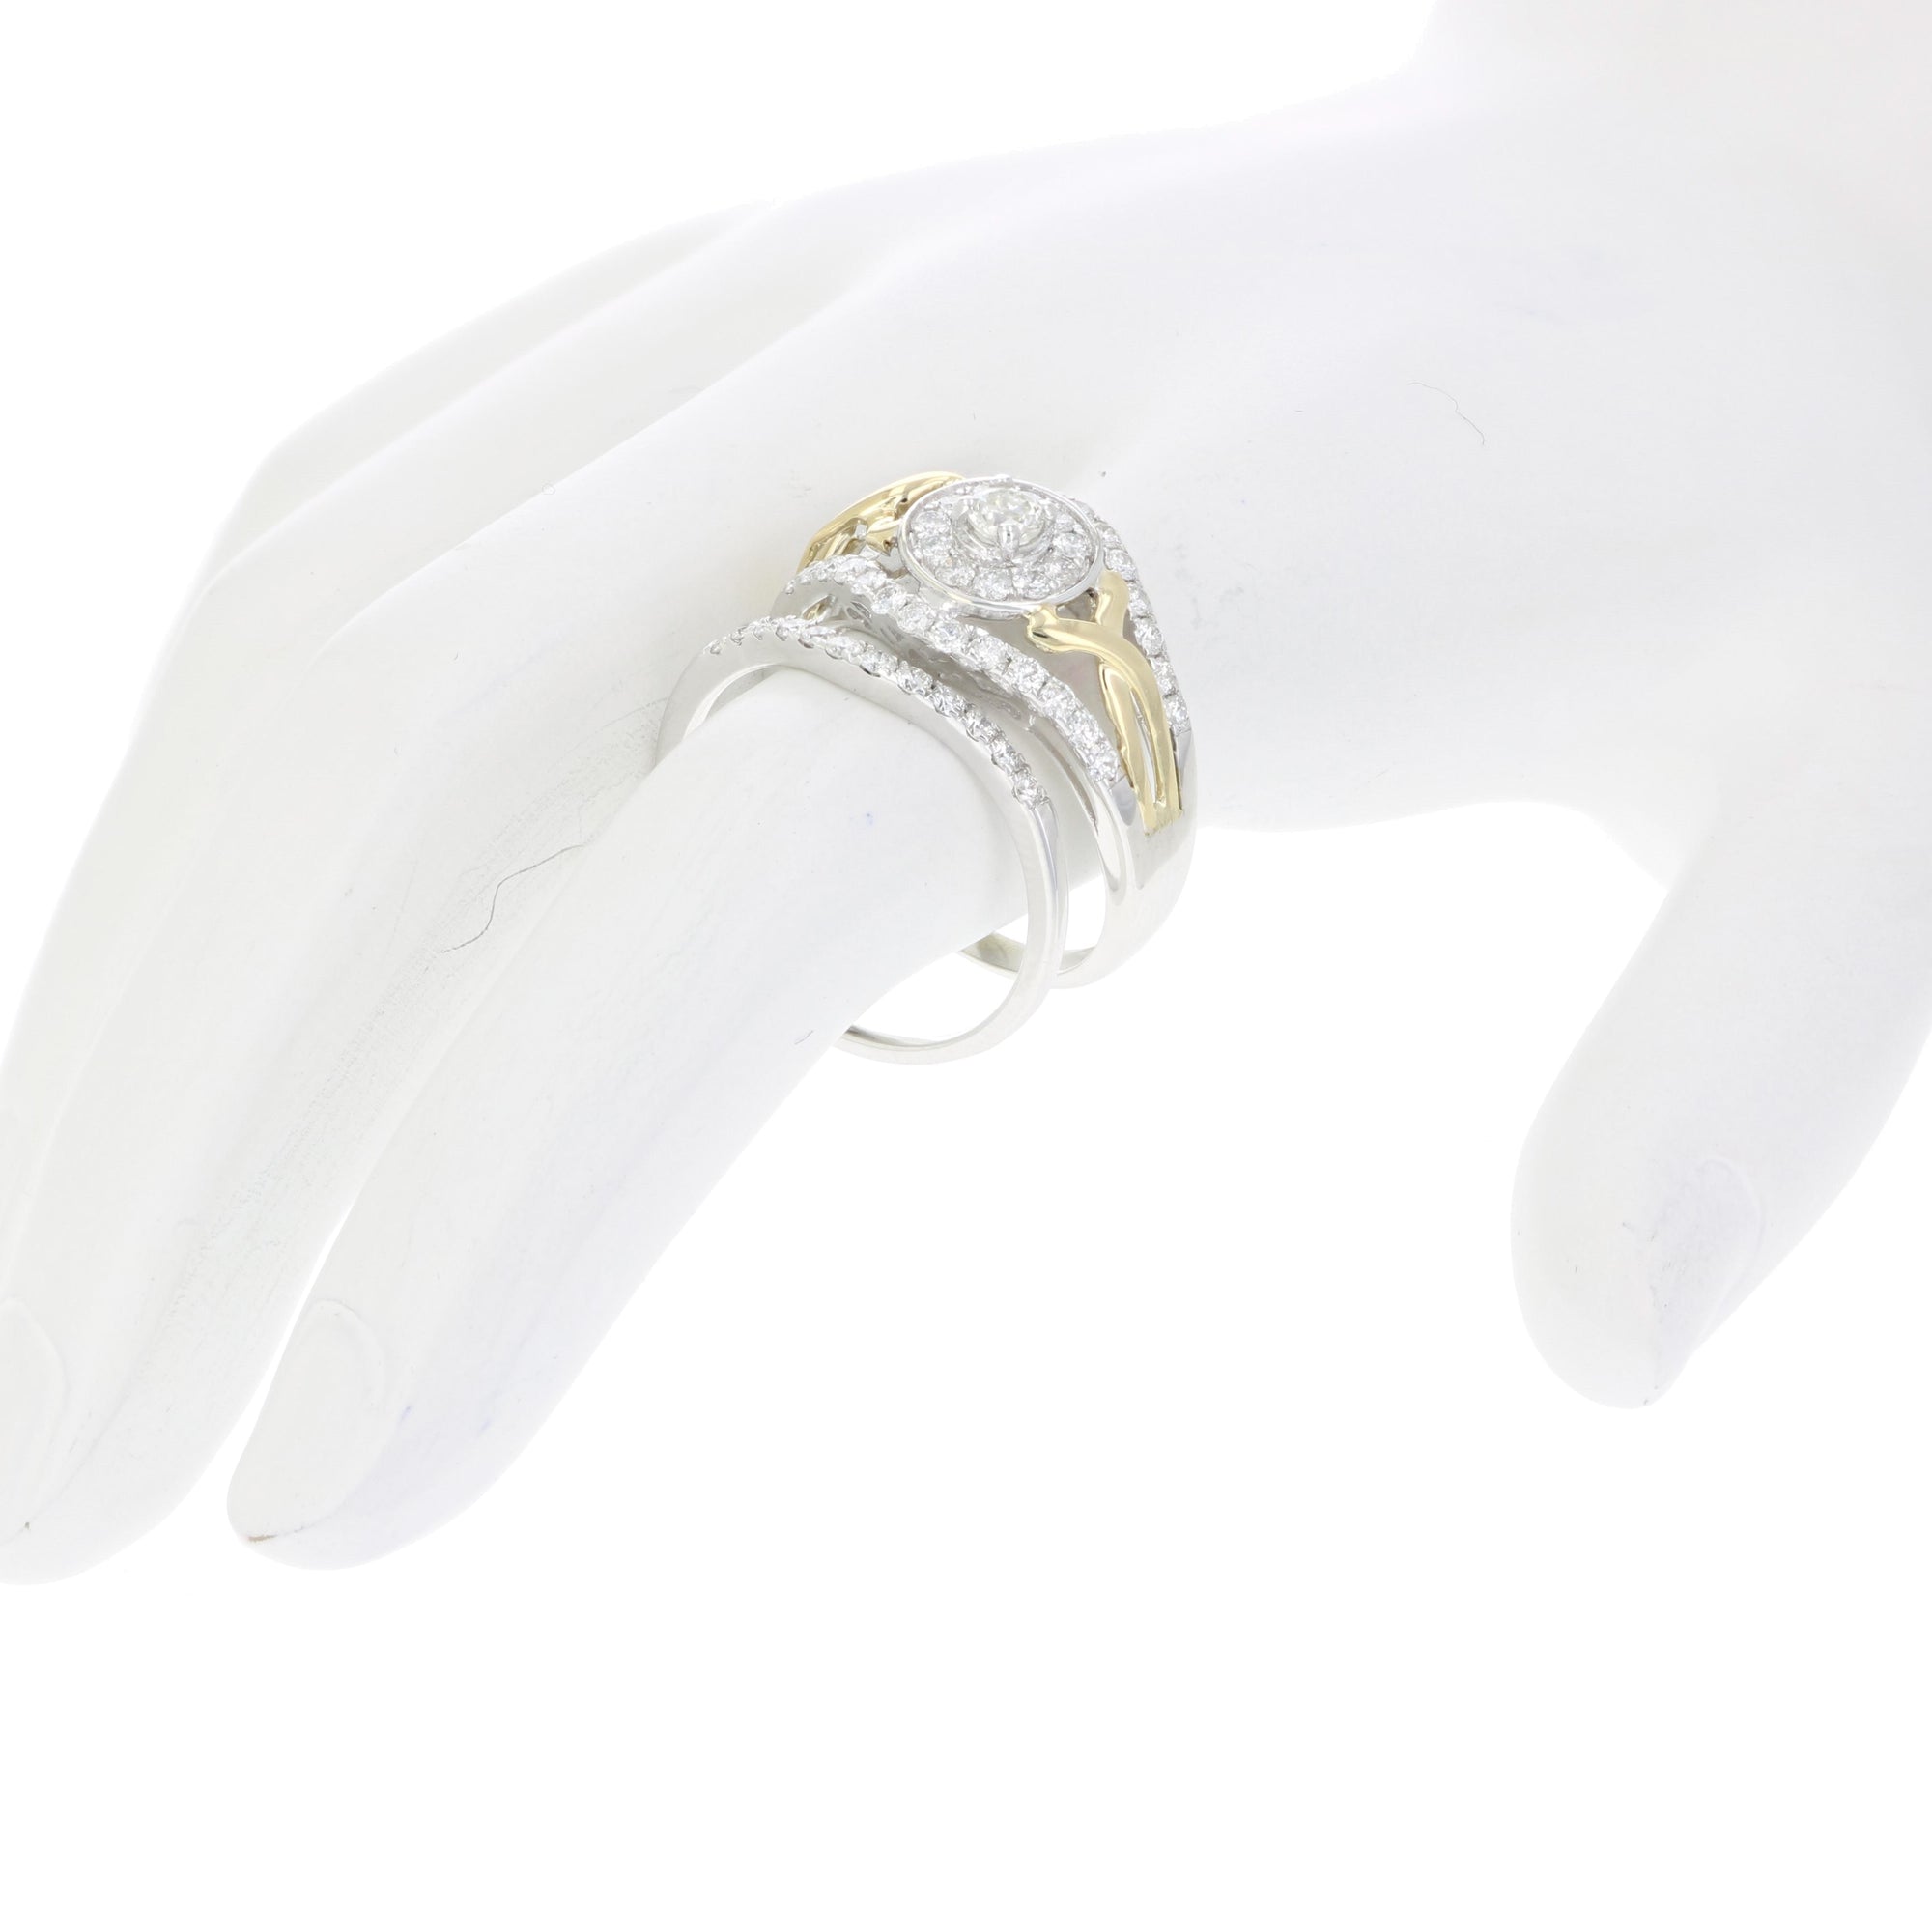 7/8 cttw Diamond Wedding Engagement Ring Set 14K White Yellow Gold Halo